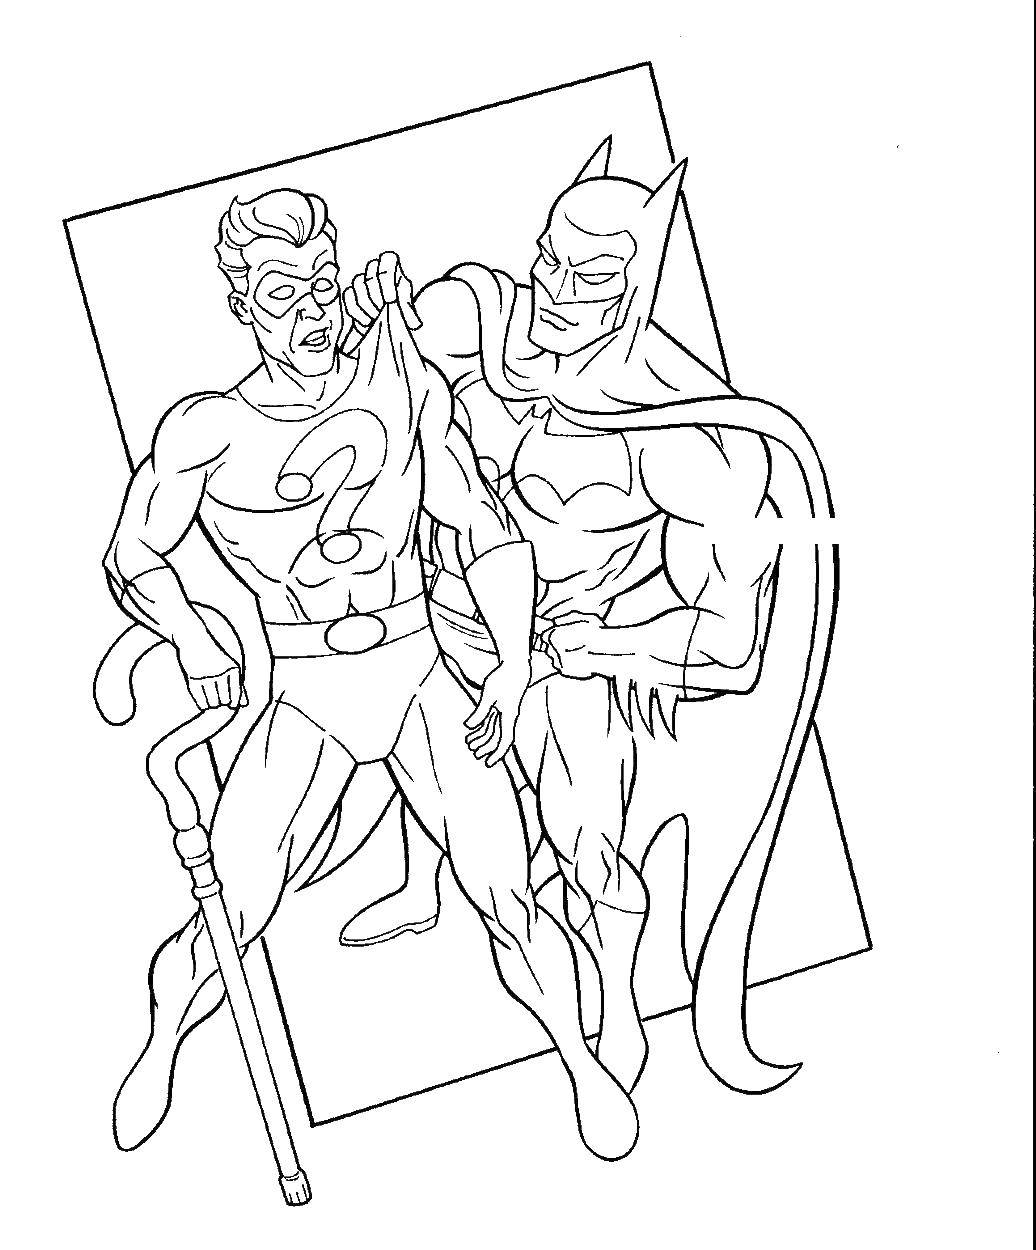 Coloring Batman caught the bad guy. Category Batman. Tags:  Batman, superheroes.